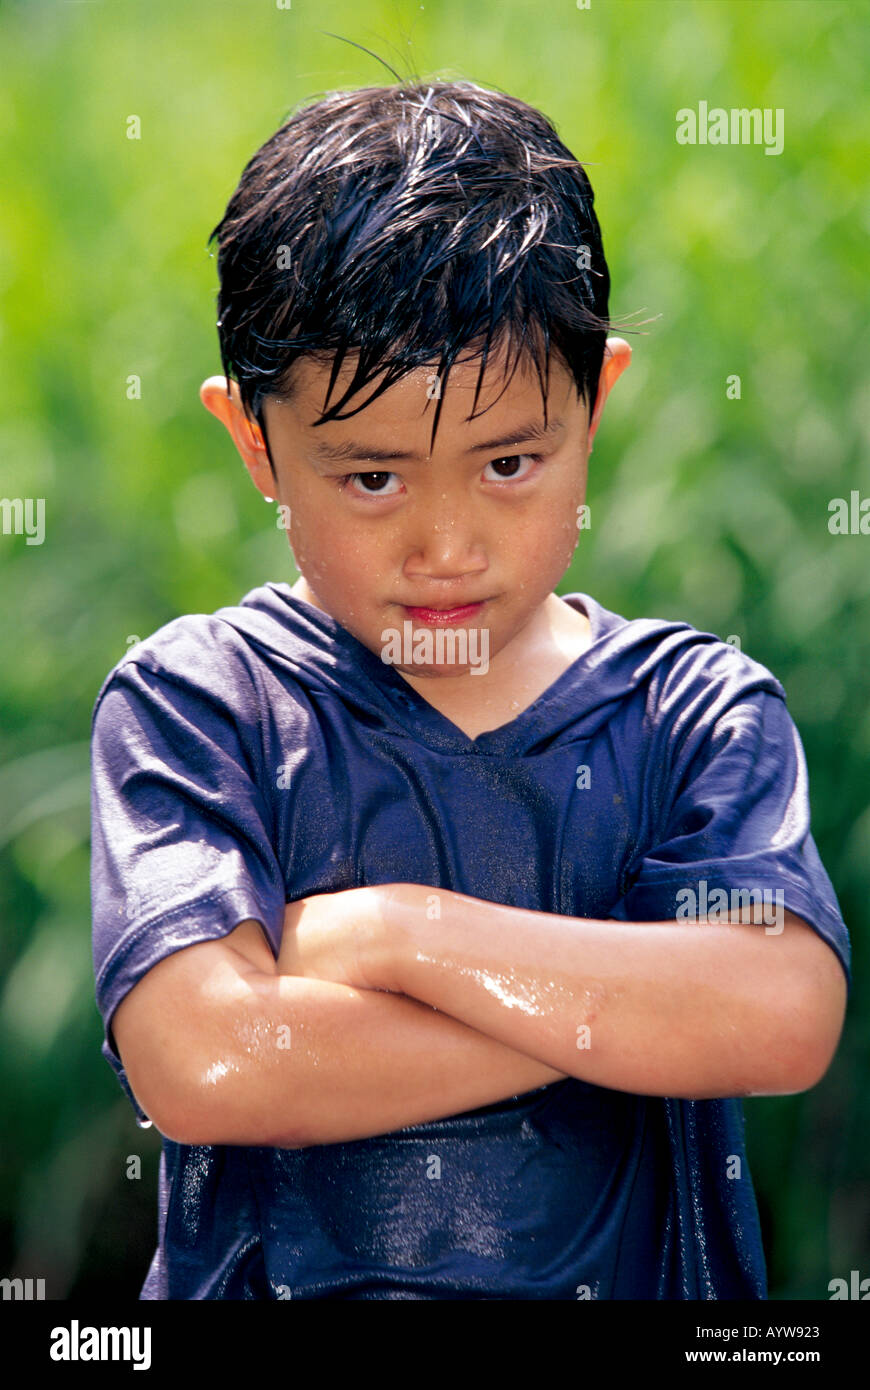 Soaking wet boy Stock Photo